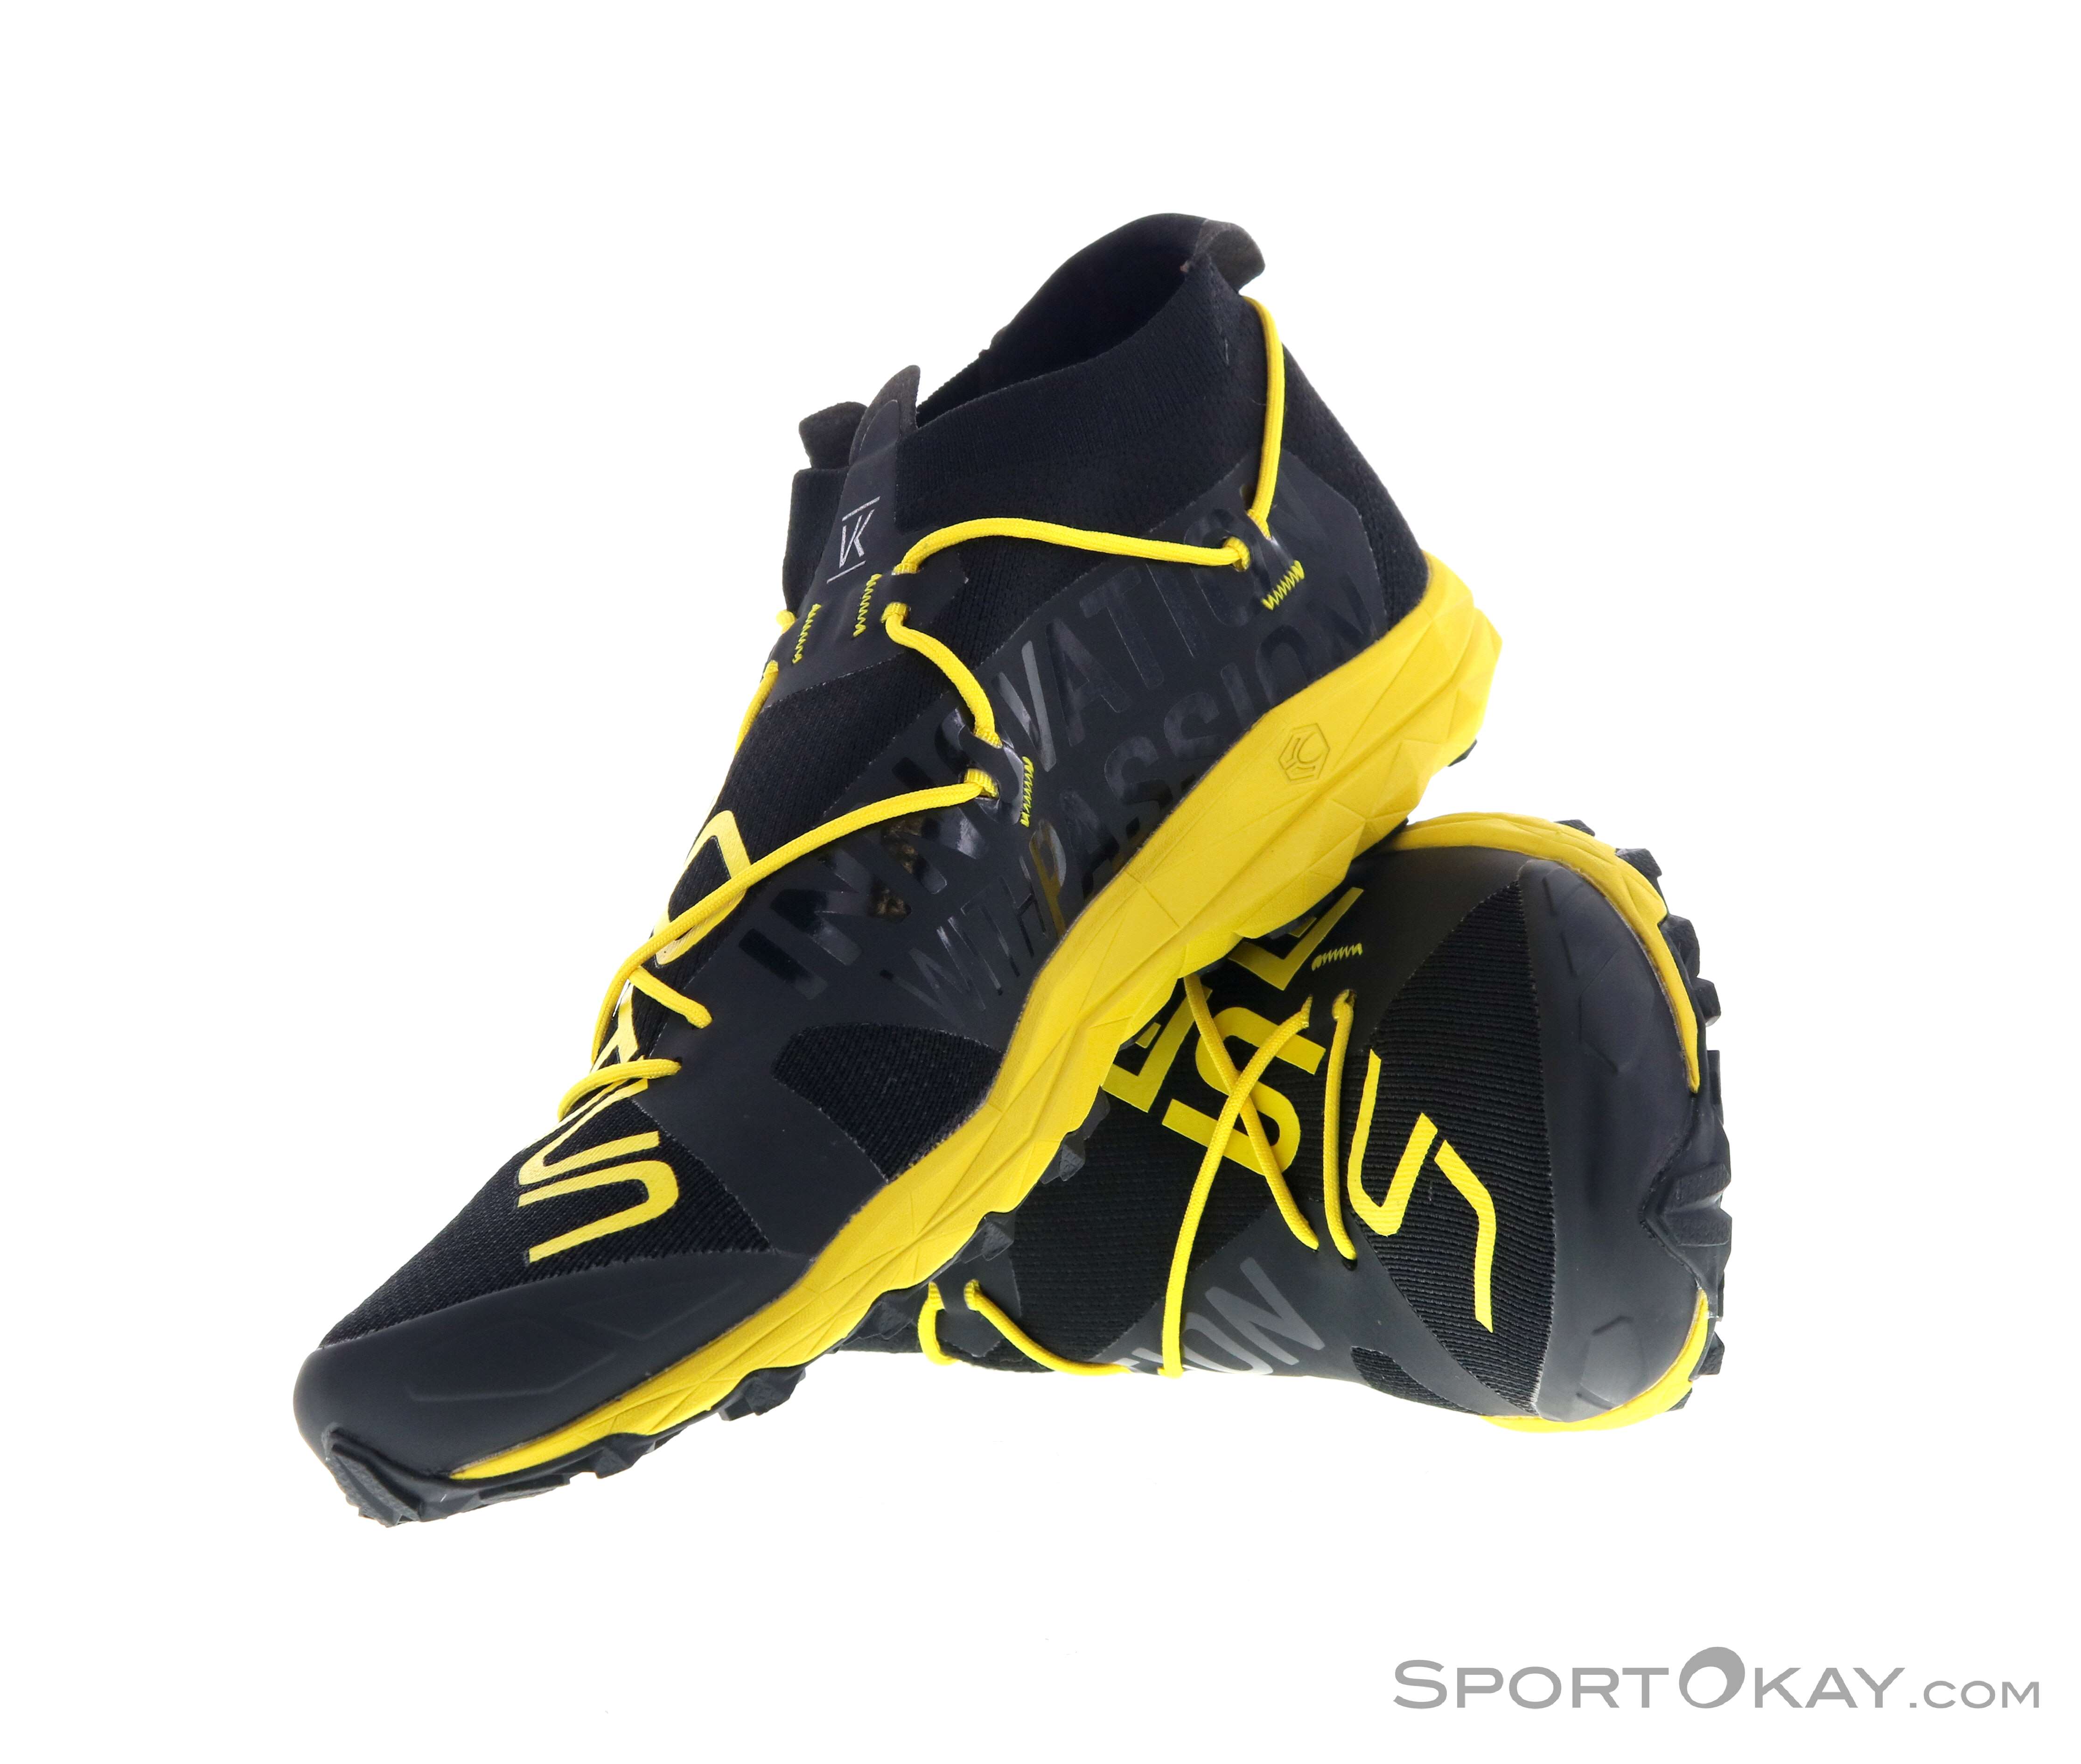 la sportiva vk trail running shoe